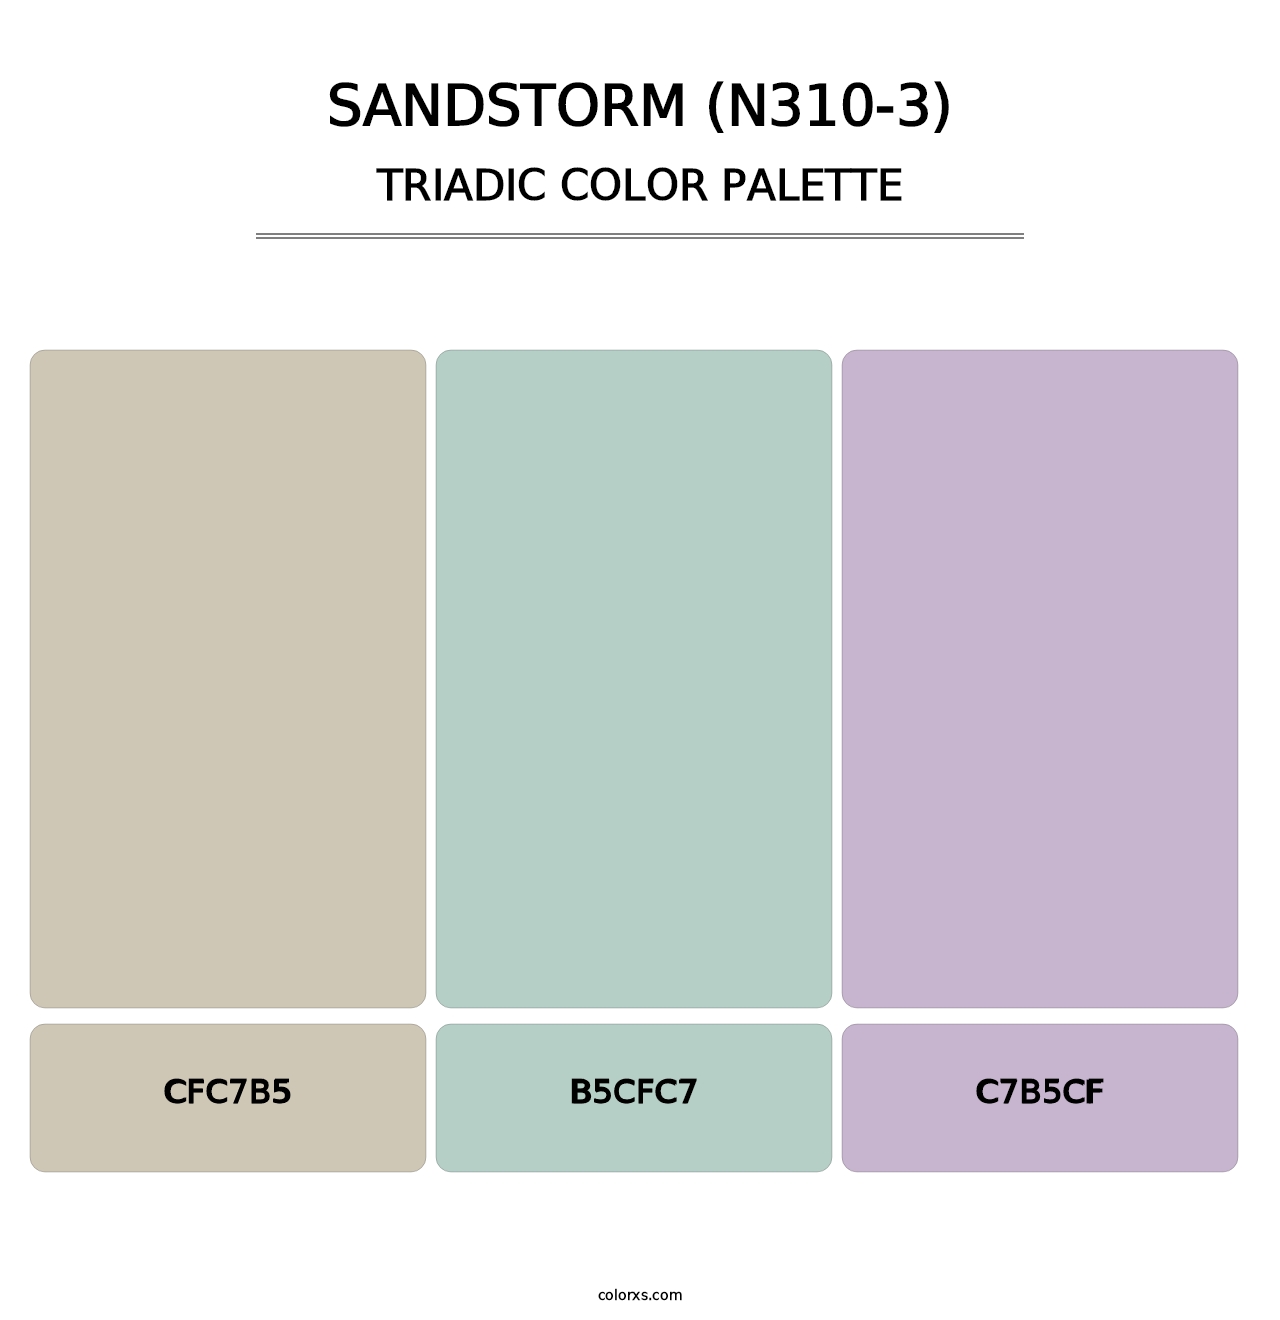 Sandstorm (N310-3) - Triadic Color Palette